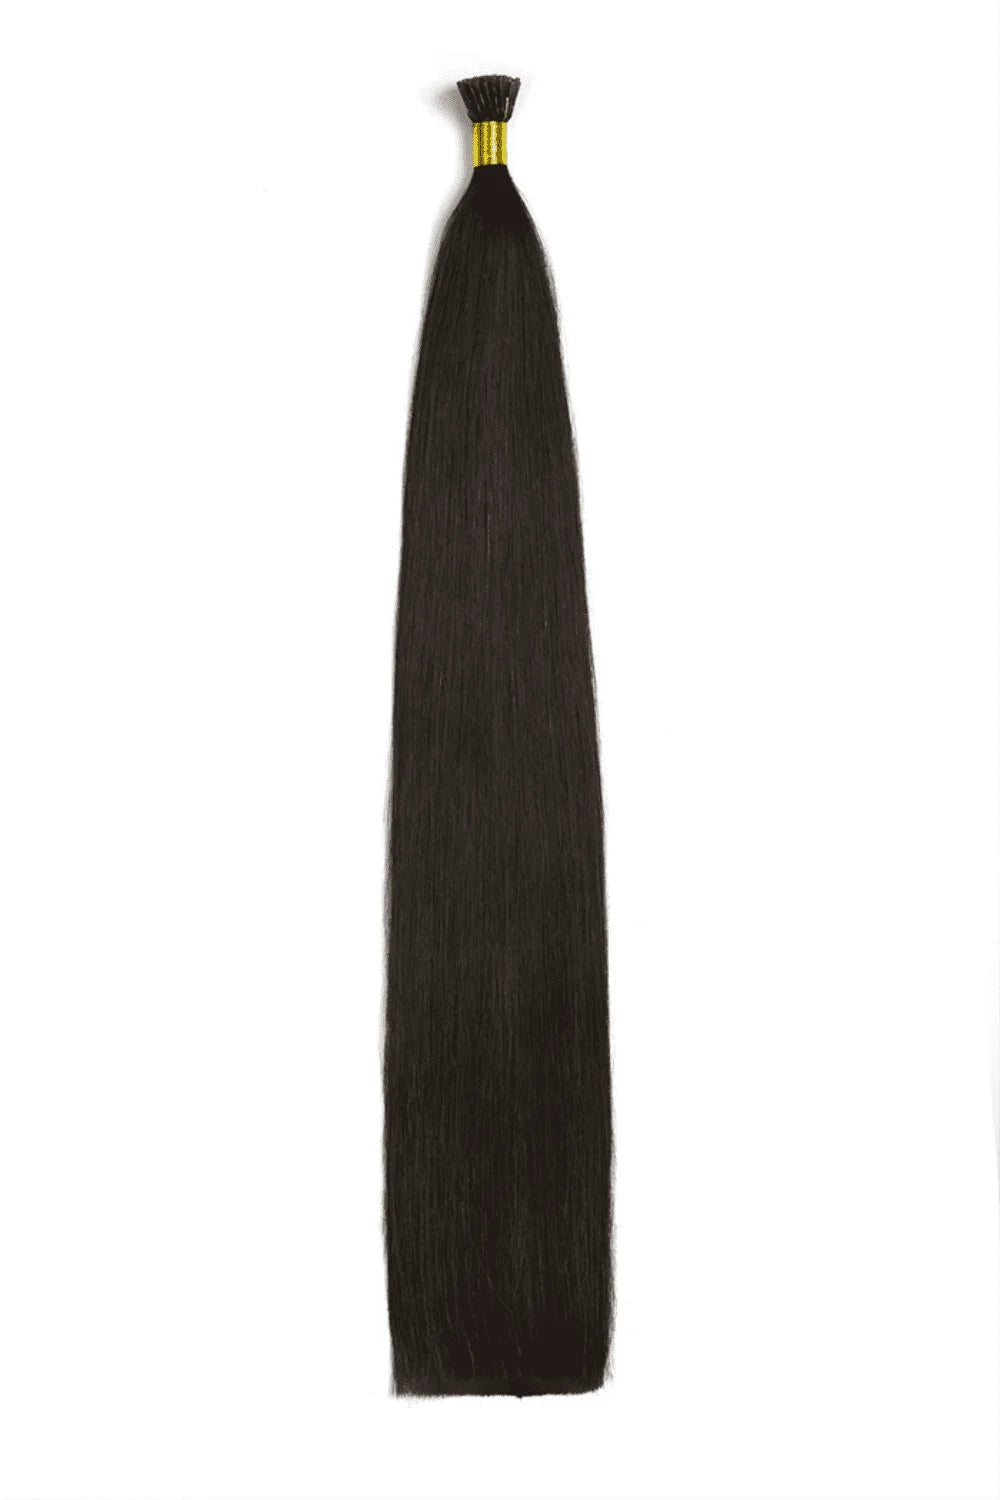 darkest brown #2 remy royale i-tip hair extension